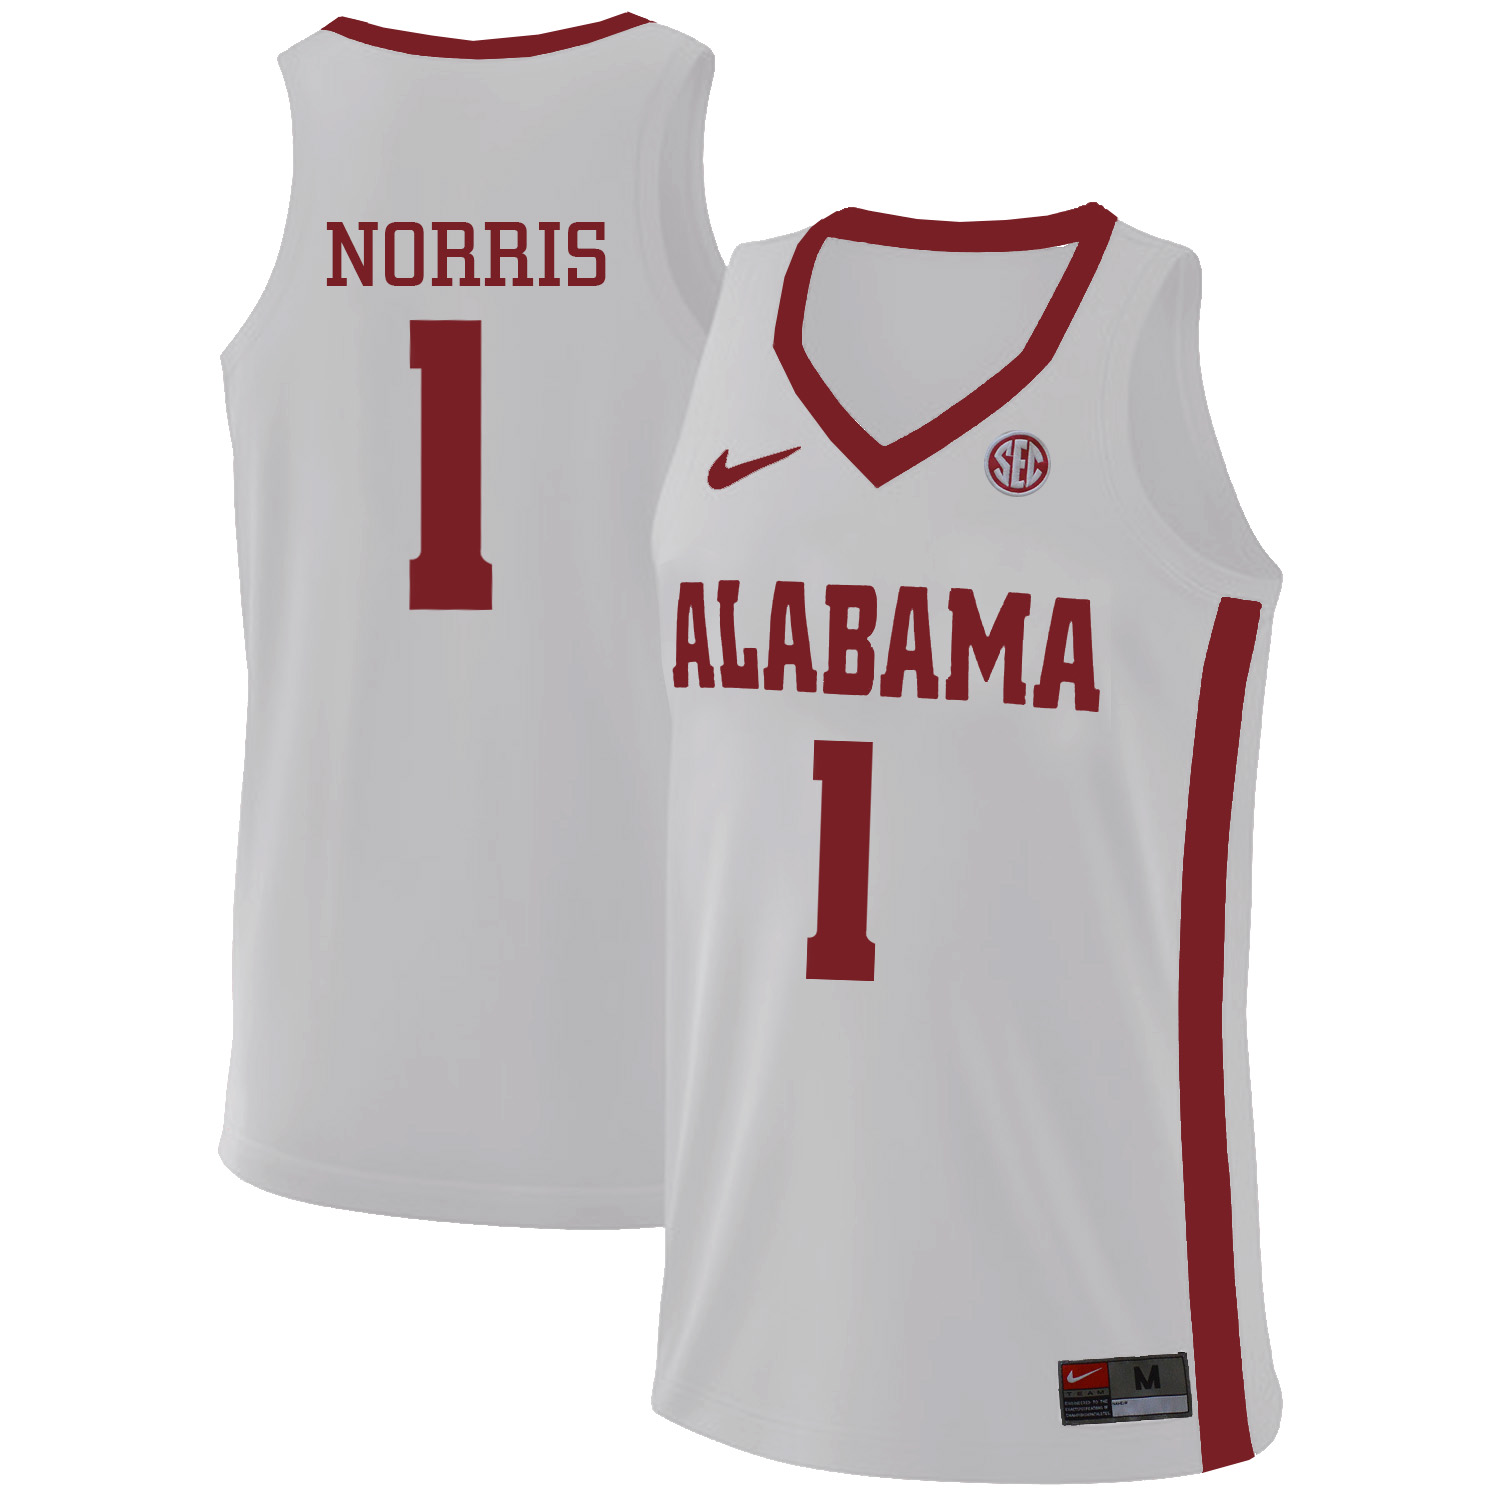 Alabama Crimson Tide 1 Riley Norris White College Basketball Jersey